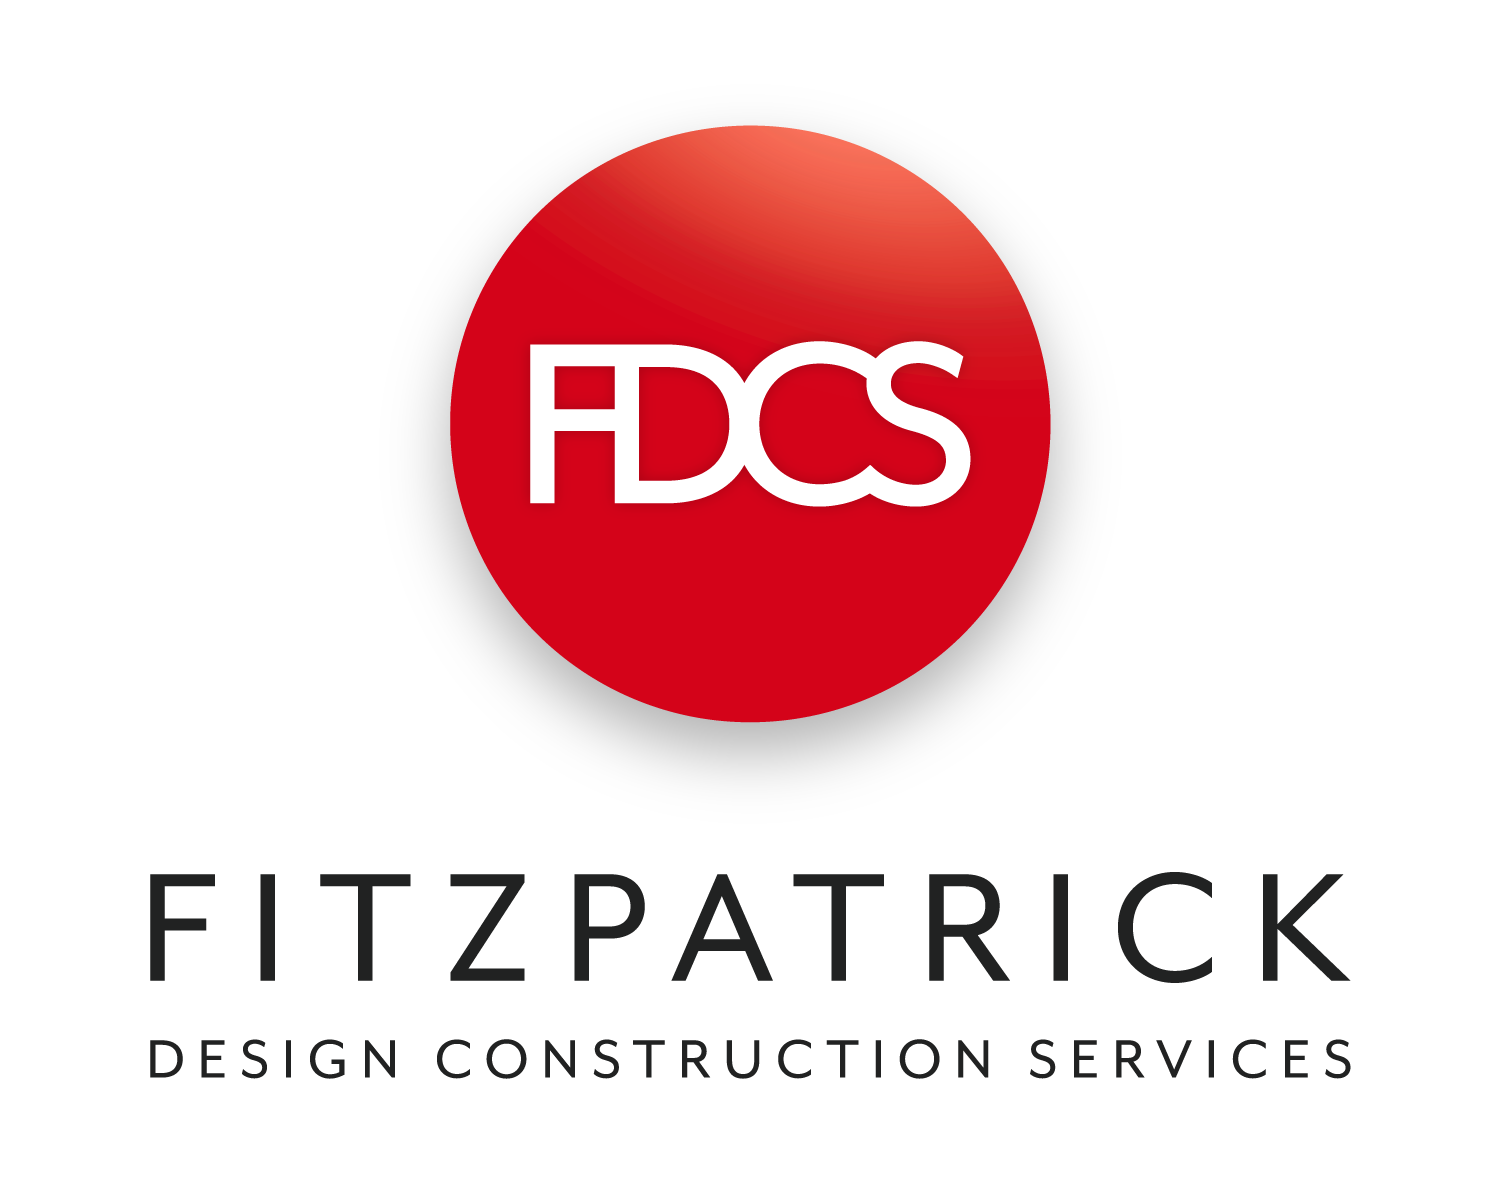 Fitzpatrick Design Construction Services Logo